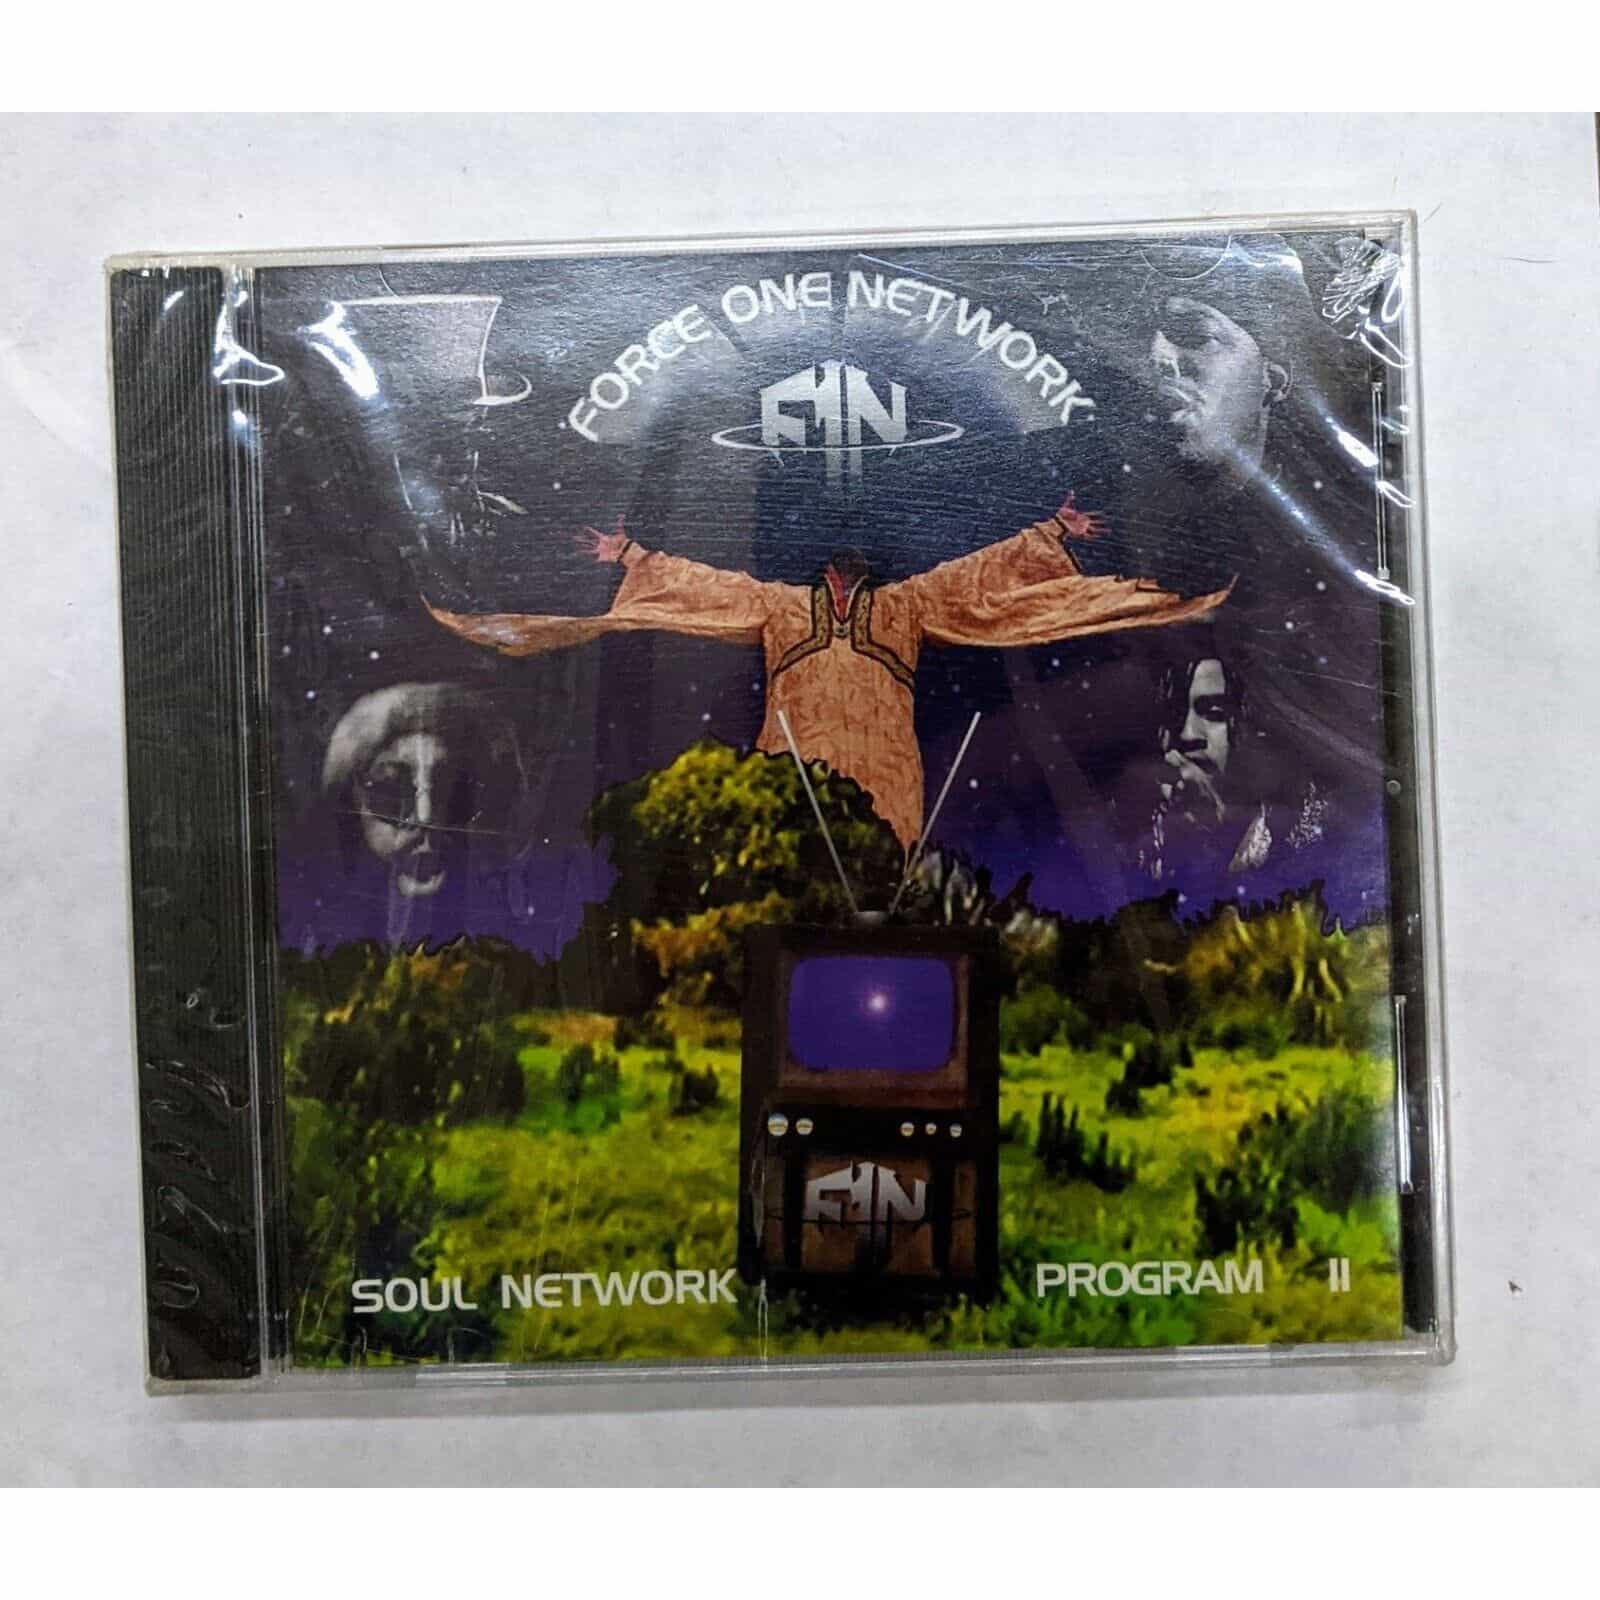 Soul Network Program II by Force One Network Music Album